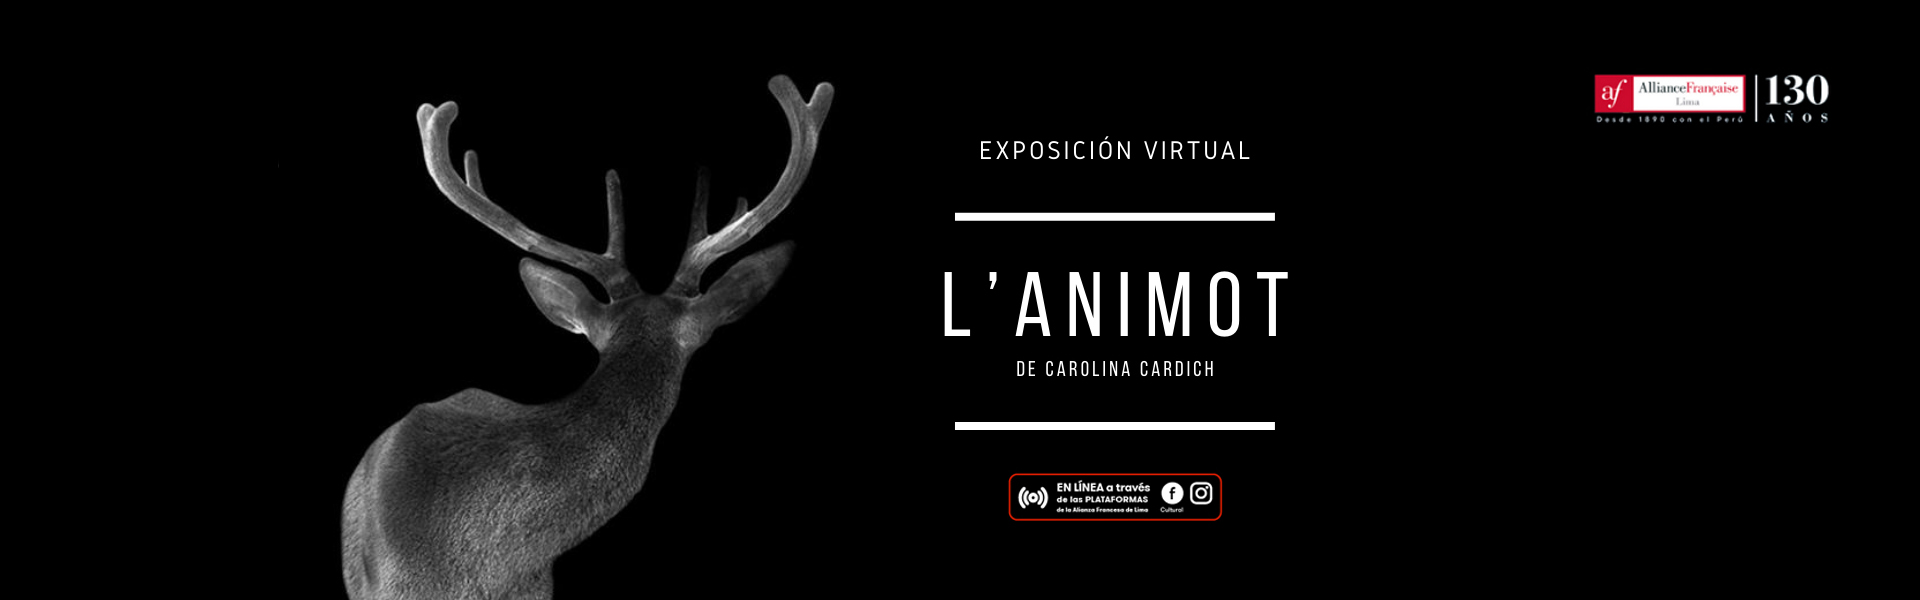 banner web expo lanimot